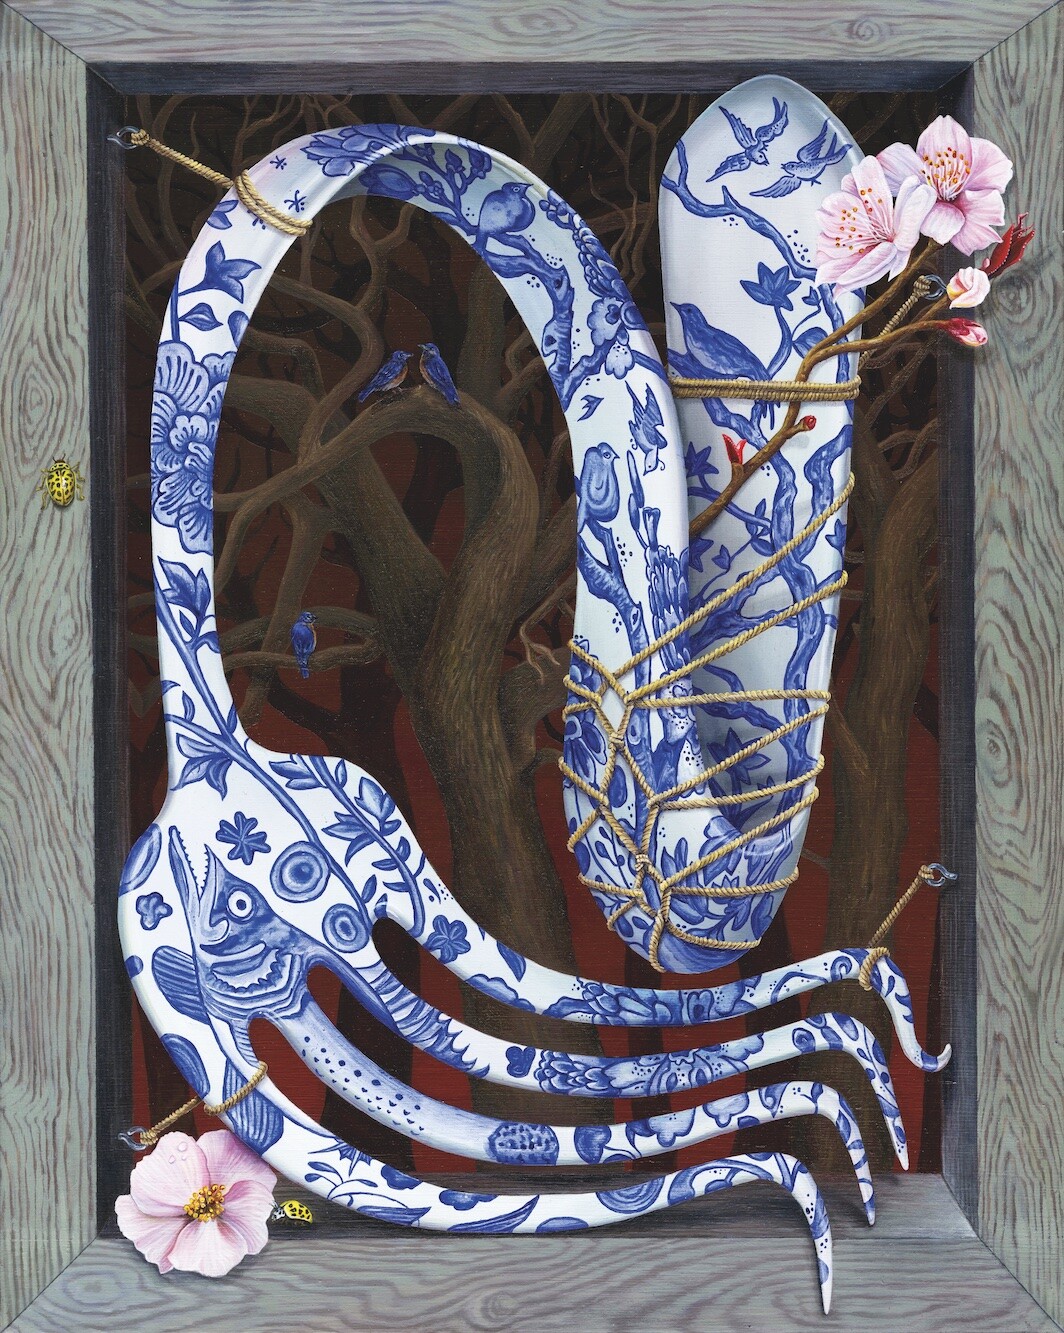 Marisa Adesman, Blue Bind, 2020, oil on panel, 10” × 8”. Courtesy of the artist and Anat Ebgi, Los Angeles / New York.